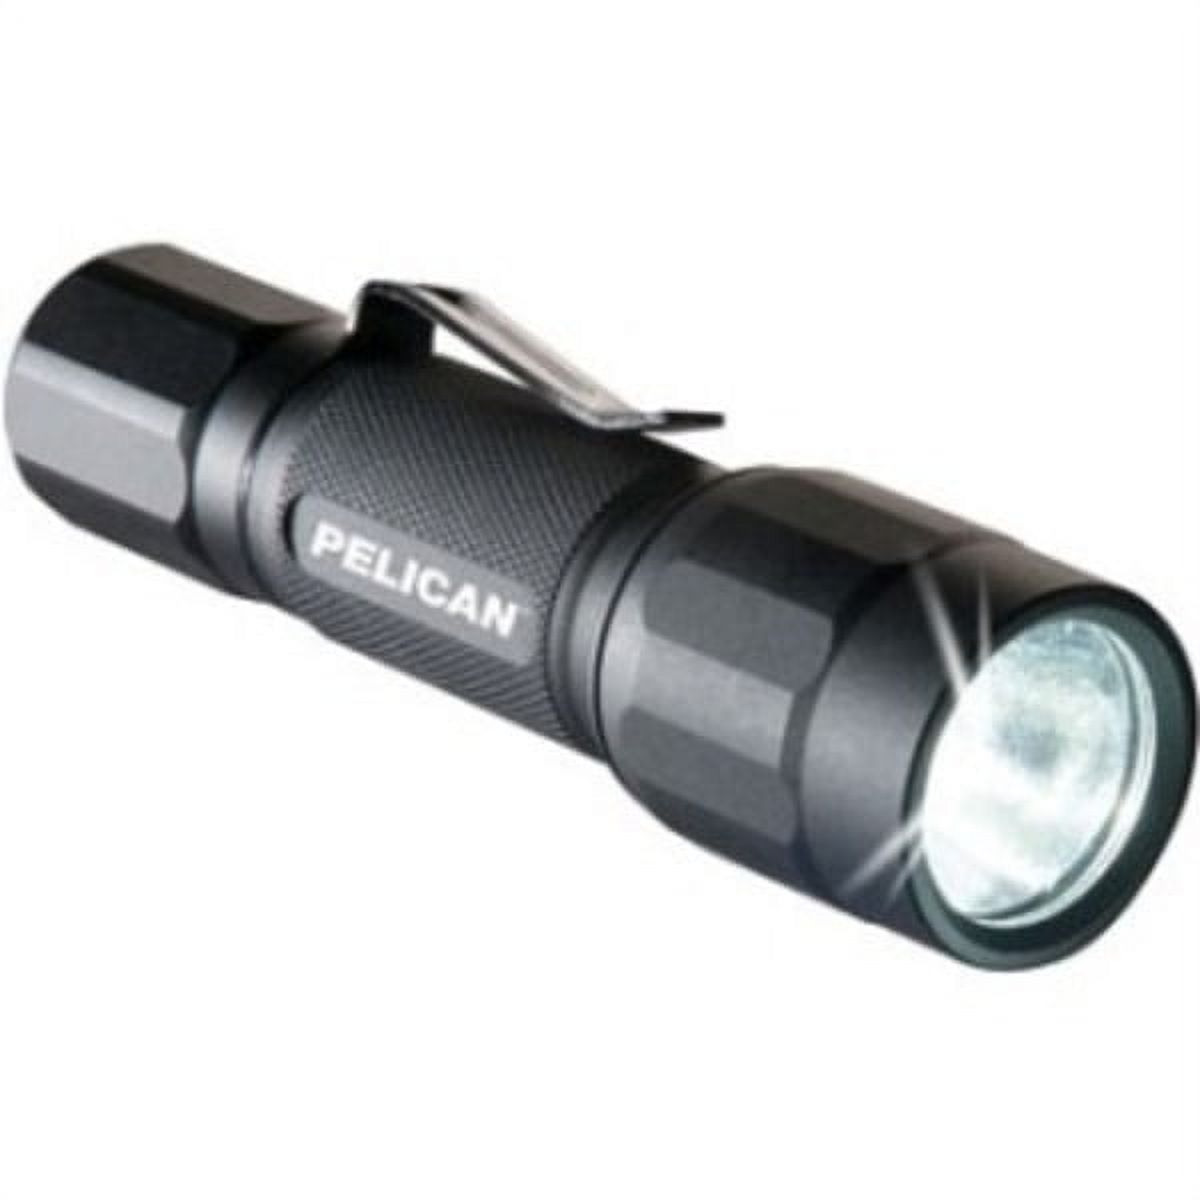 Pelican Pelican ProGear Pocket Size High Performance LED Aluminum Flashlight - image 1 of 5